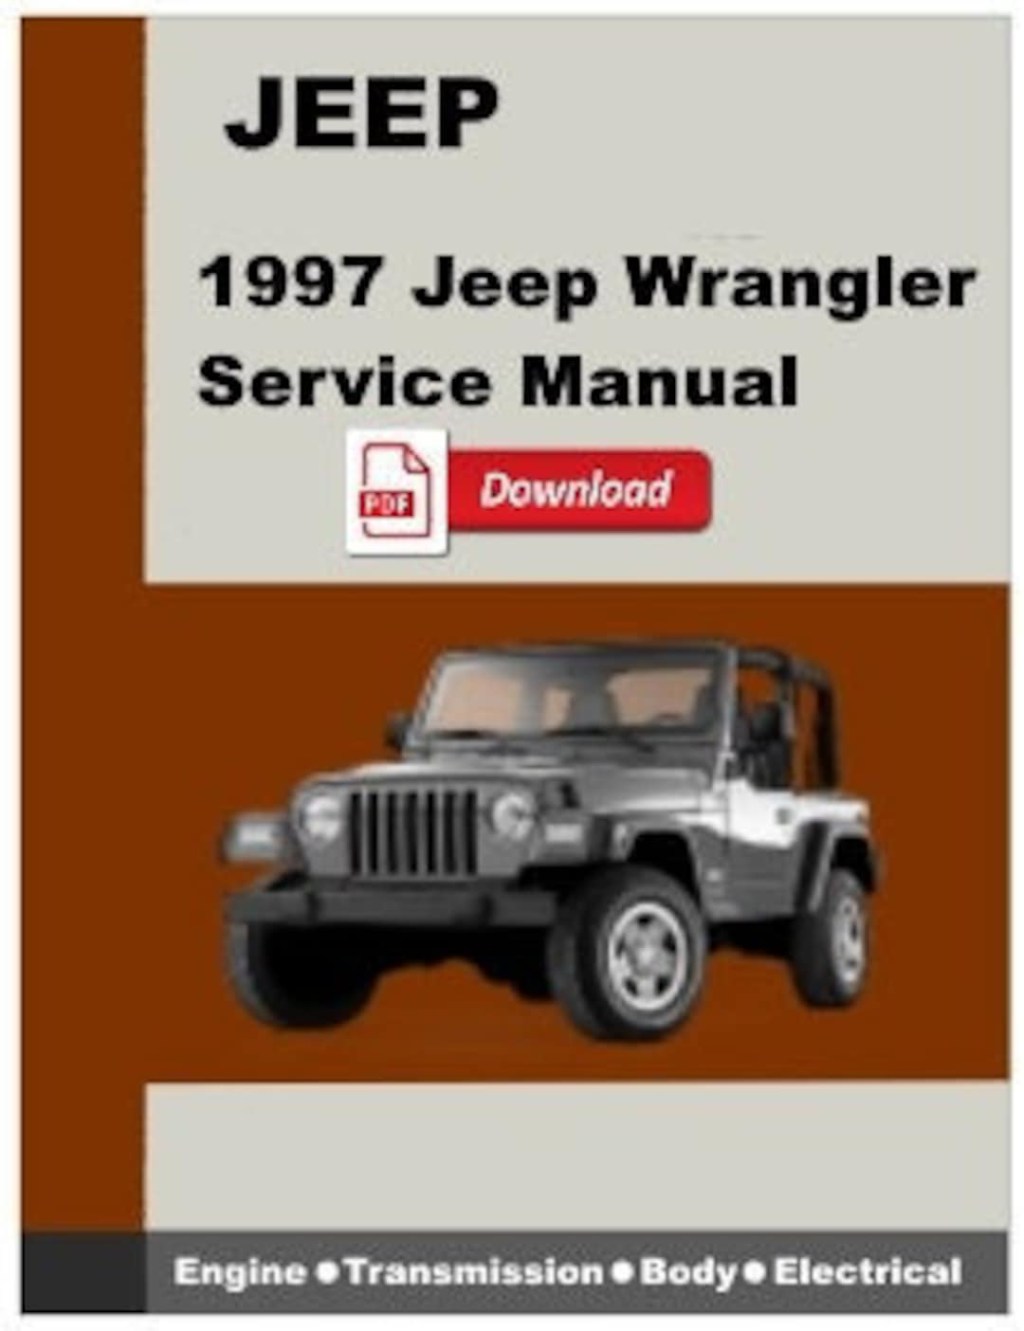 97 jeep wrangler owners manual pdf - Jeep Wrangler Service Manual-pdf Download - Etsy